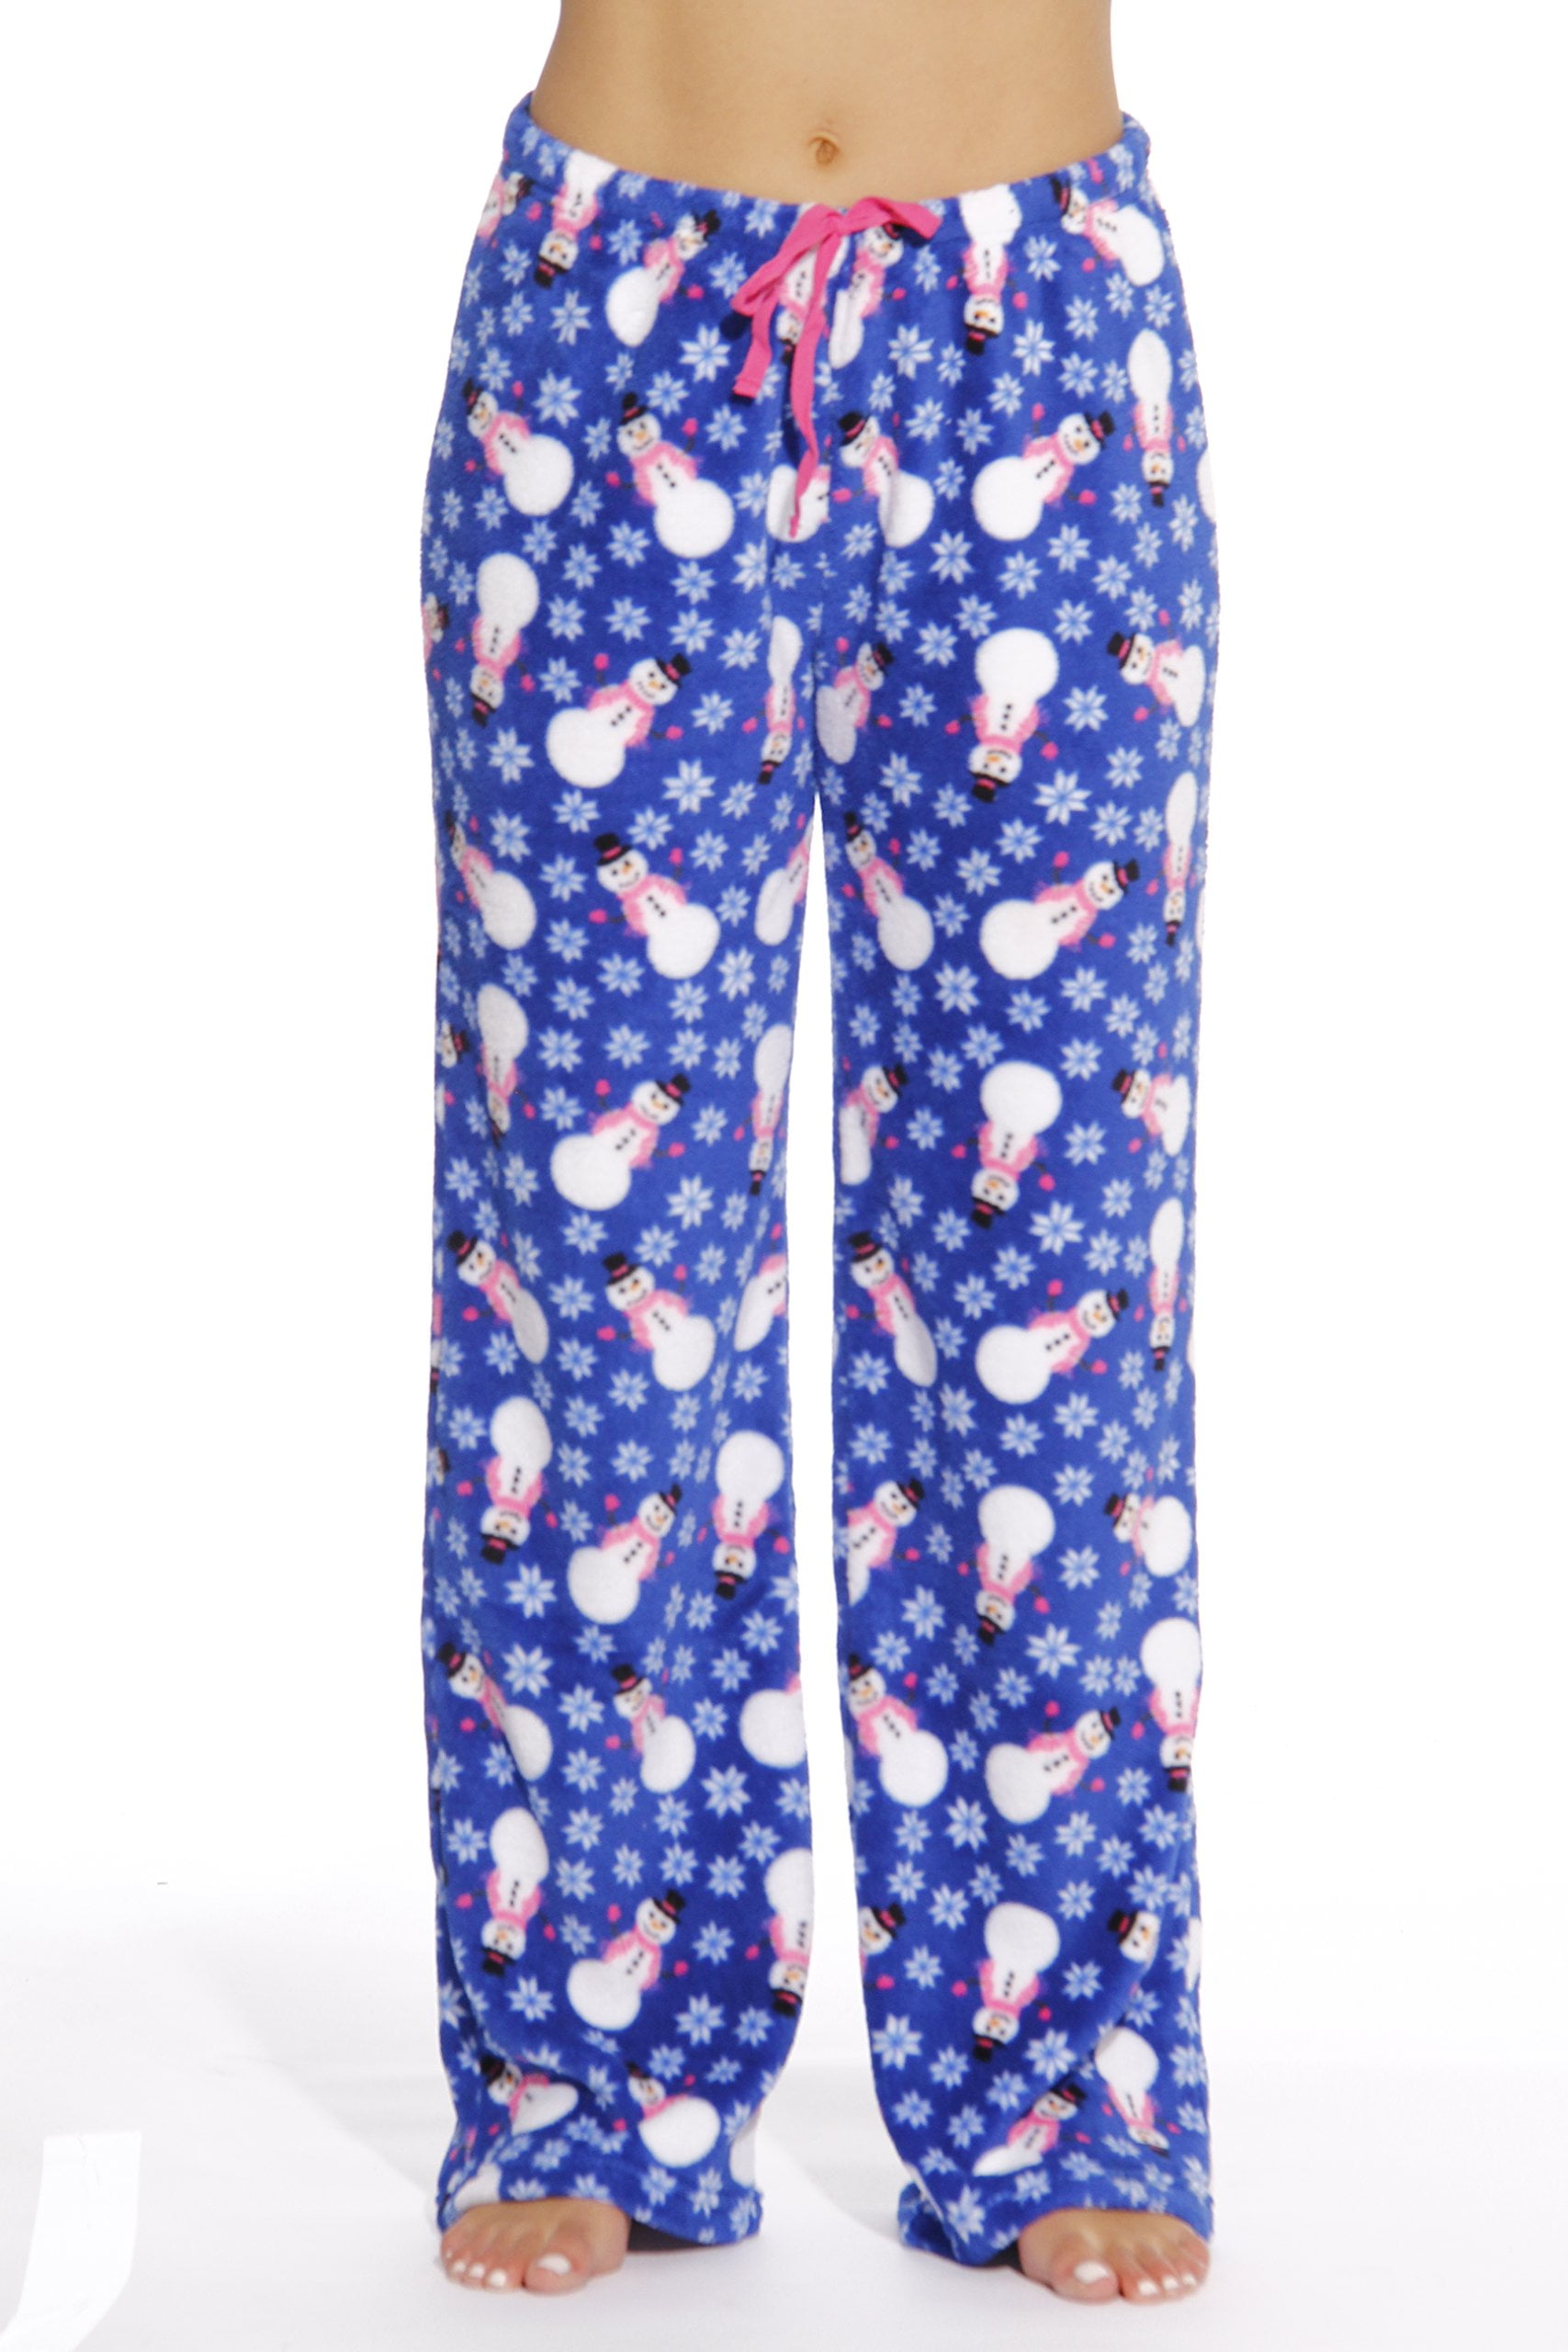 Just Love Plaid Women's Pajama Pants - Soft Sleepwear for